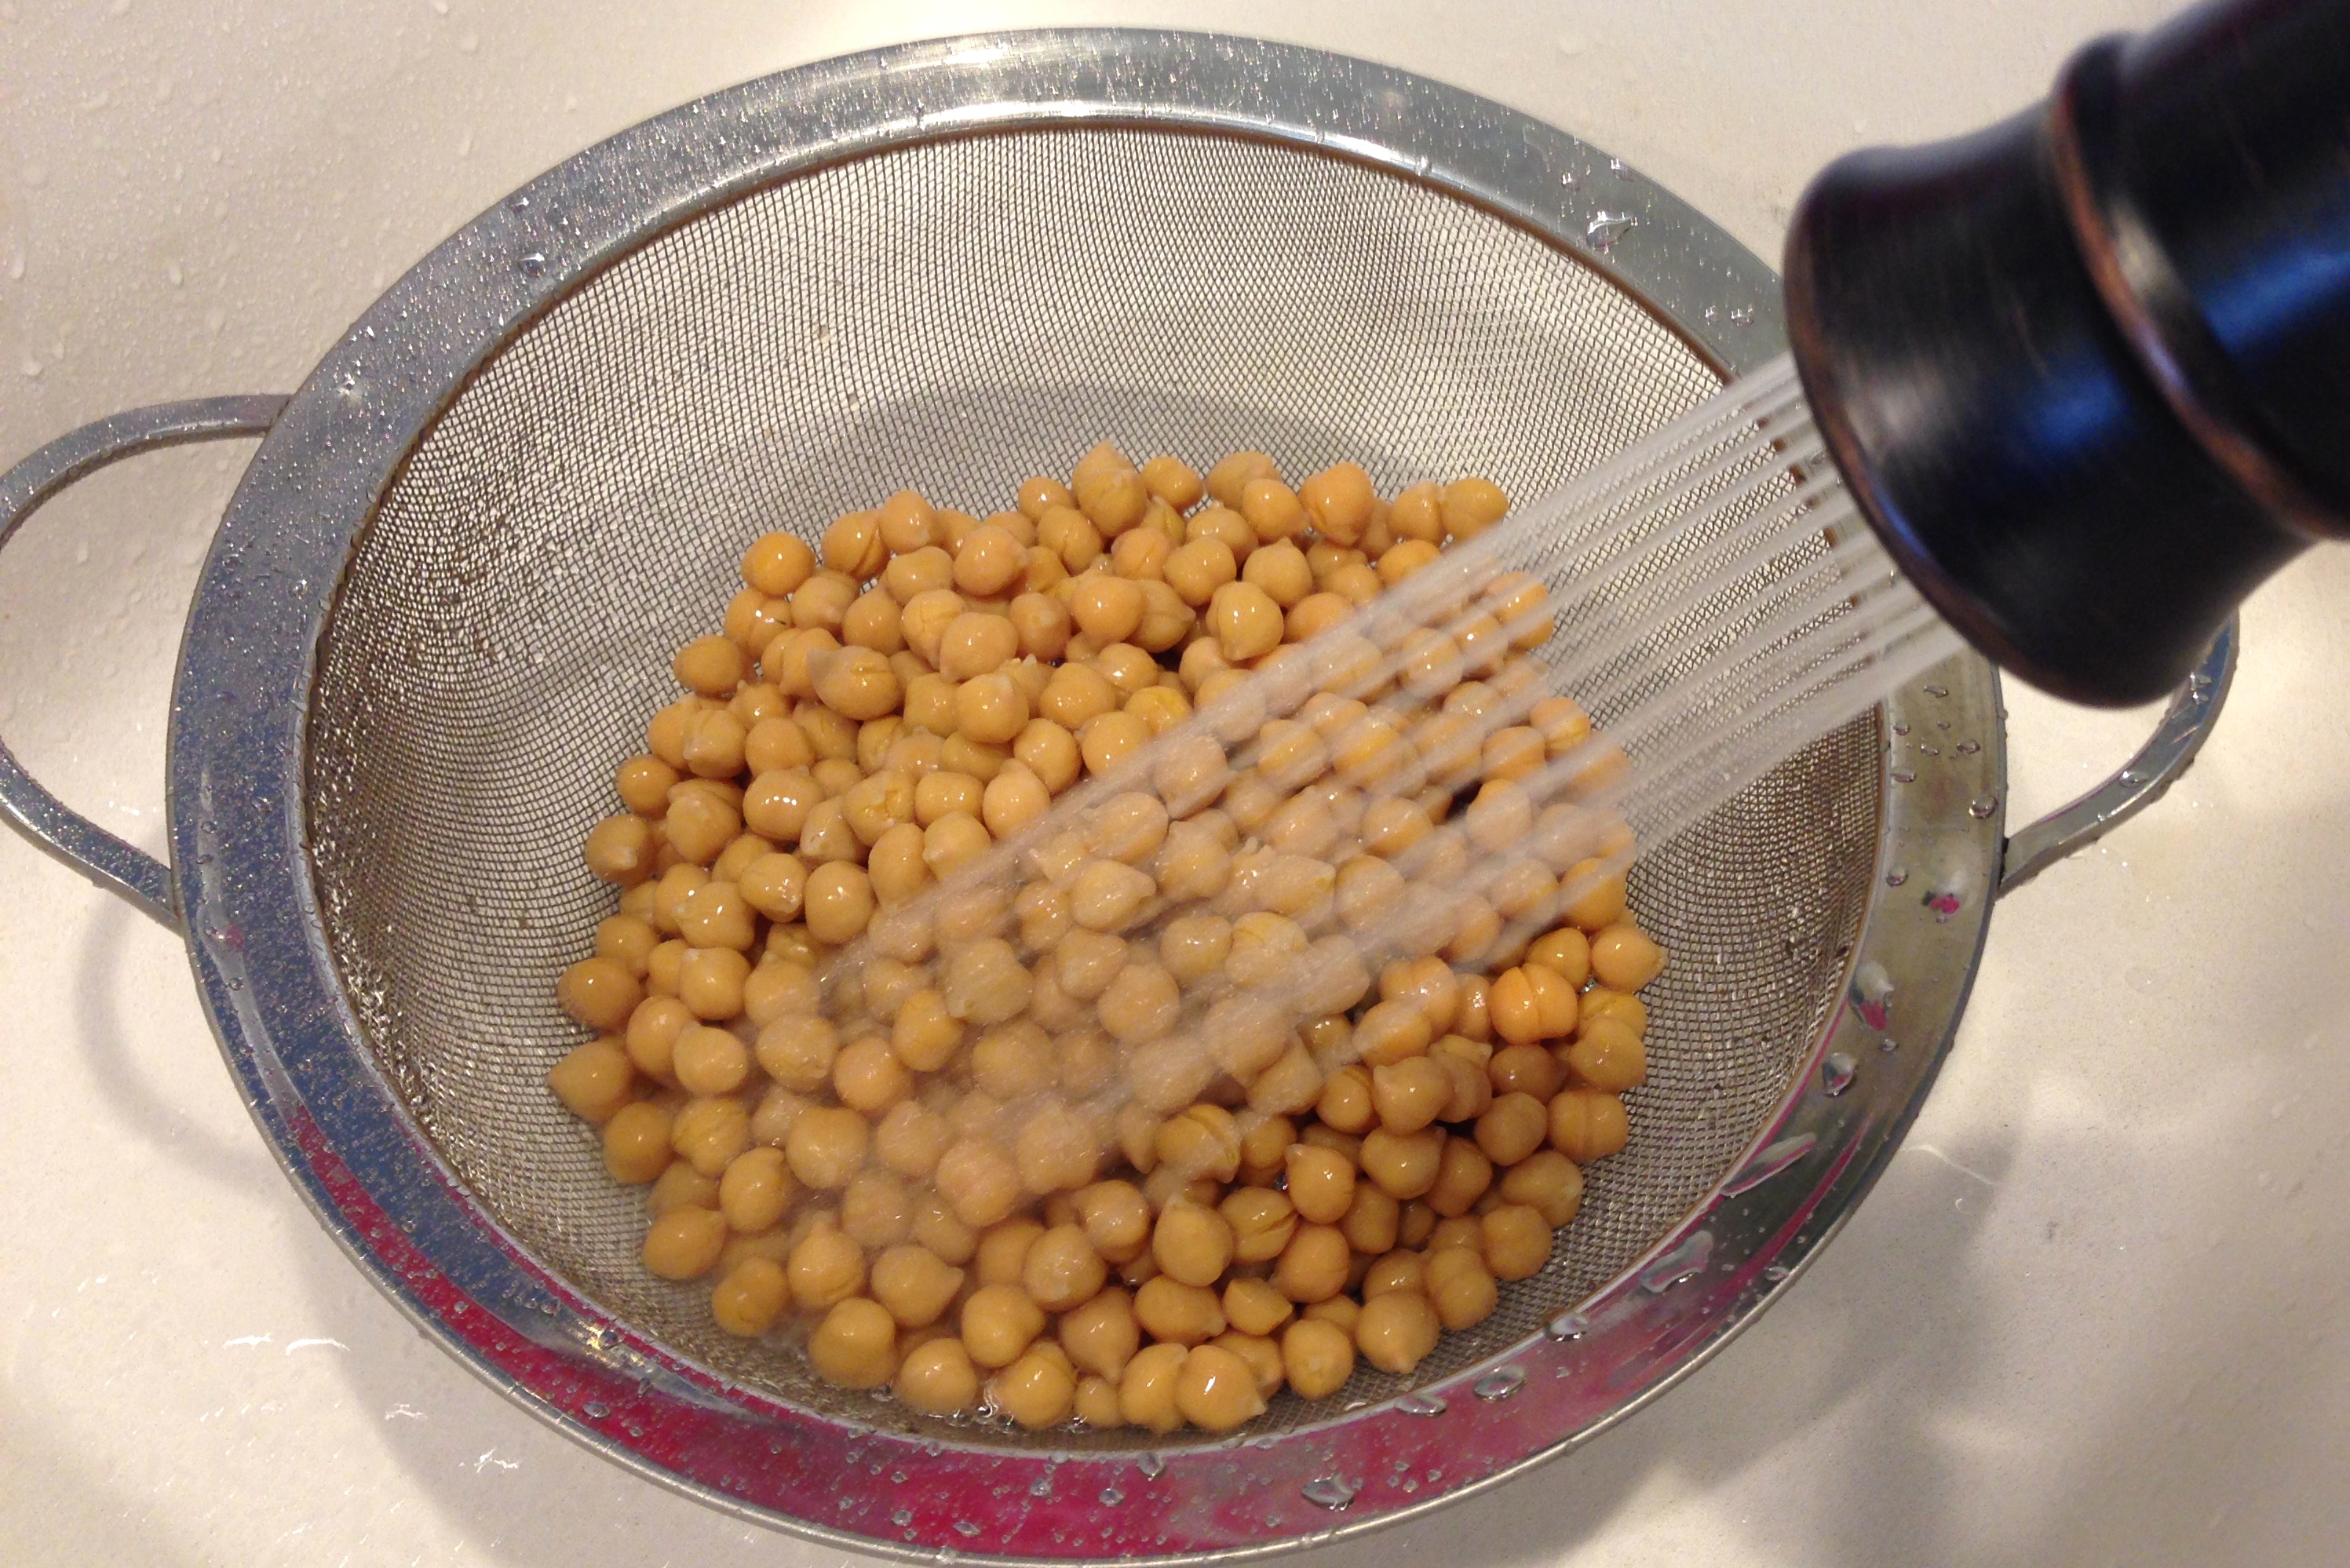 Rinse Garbanzo beans